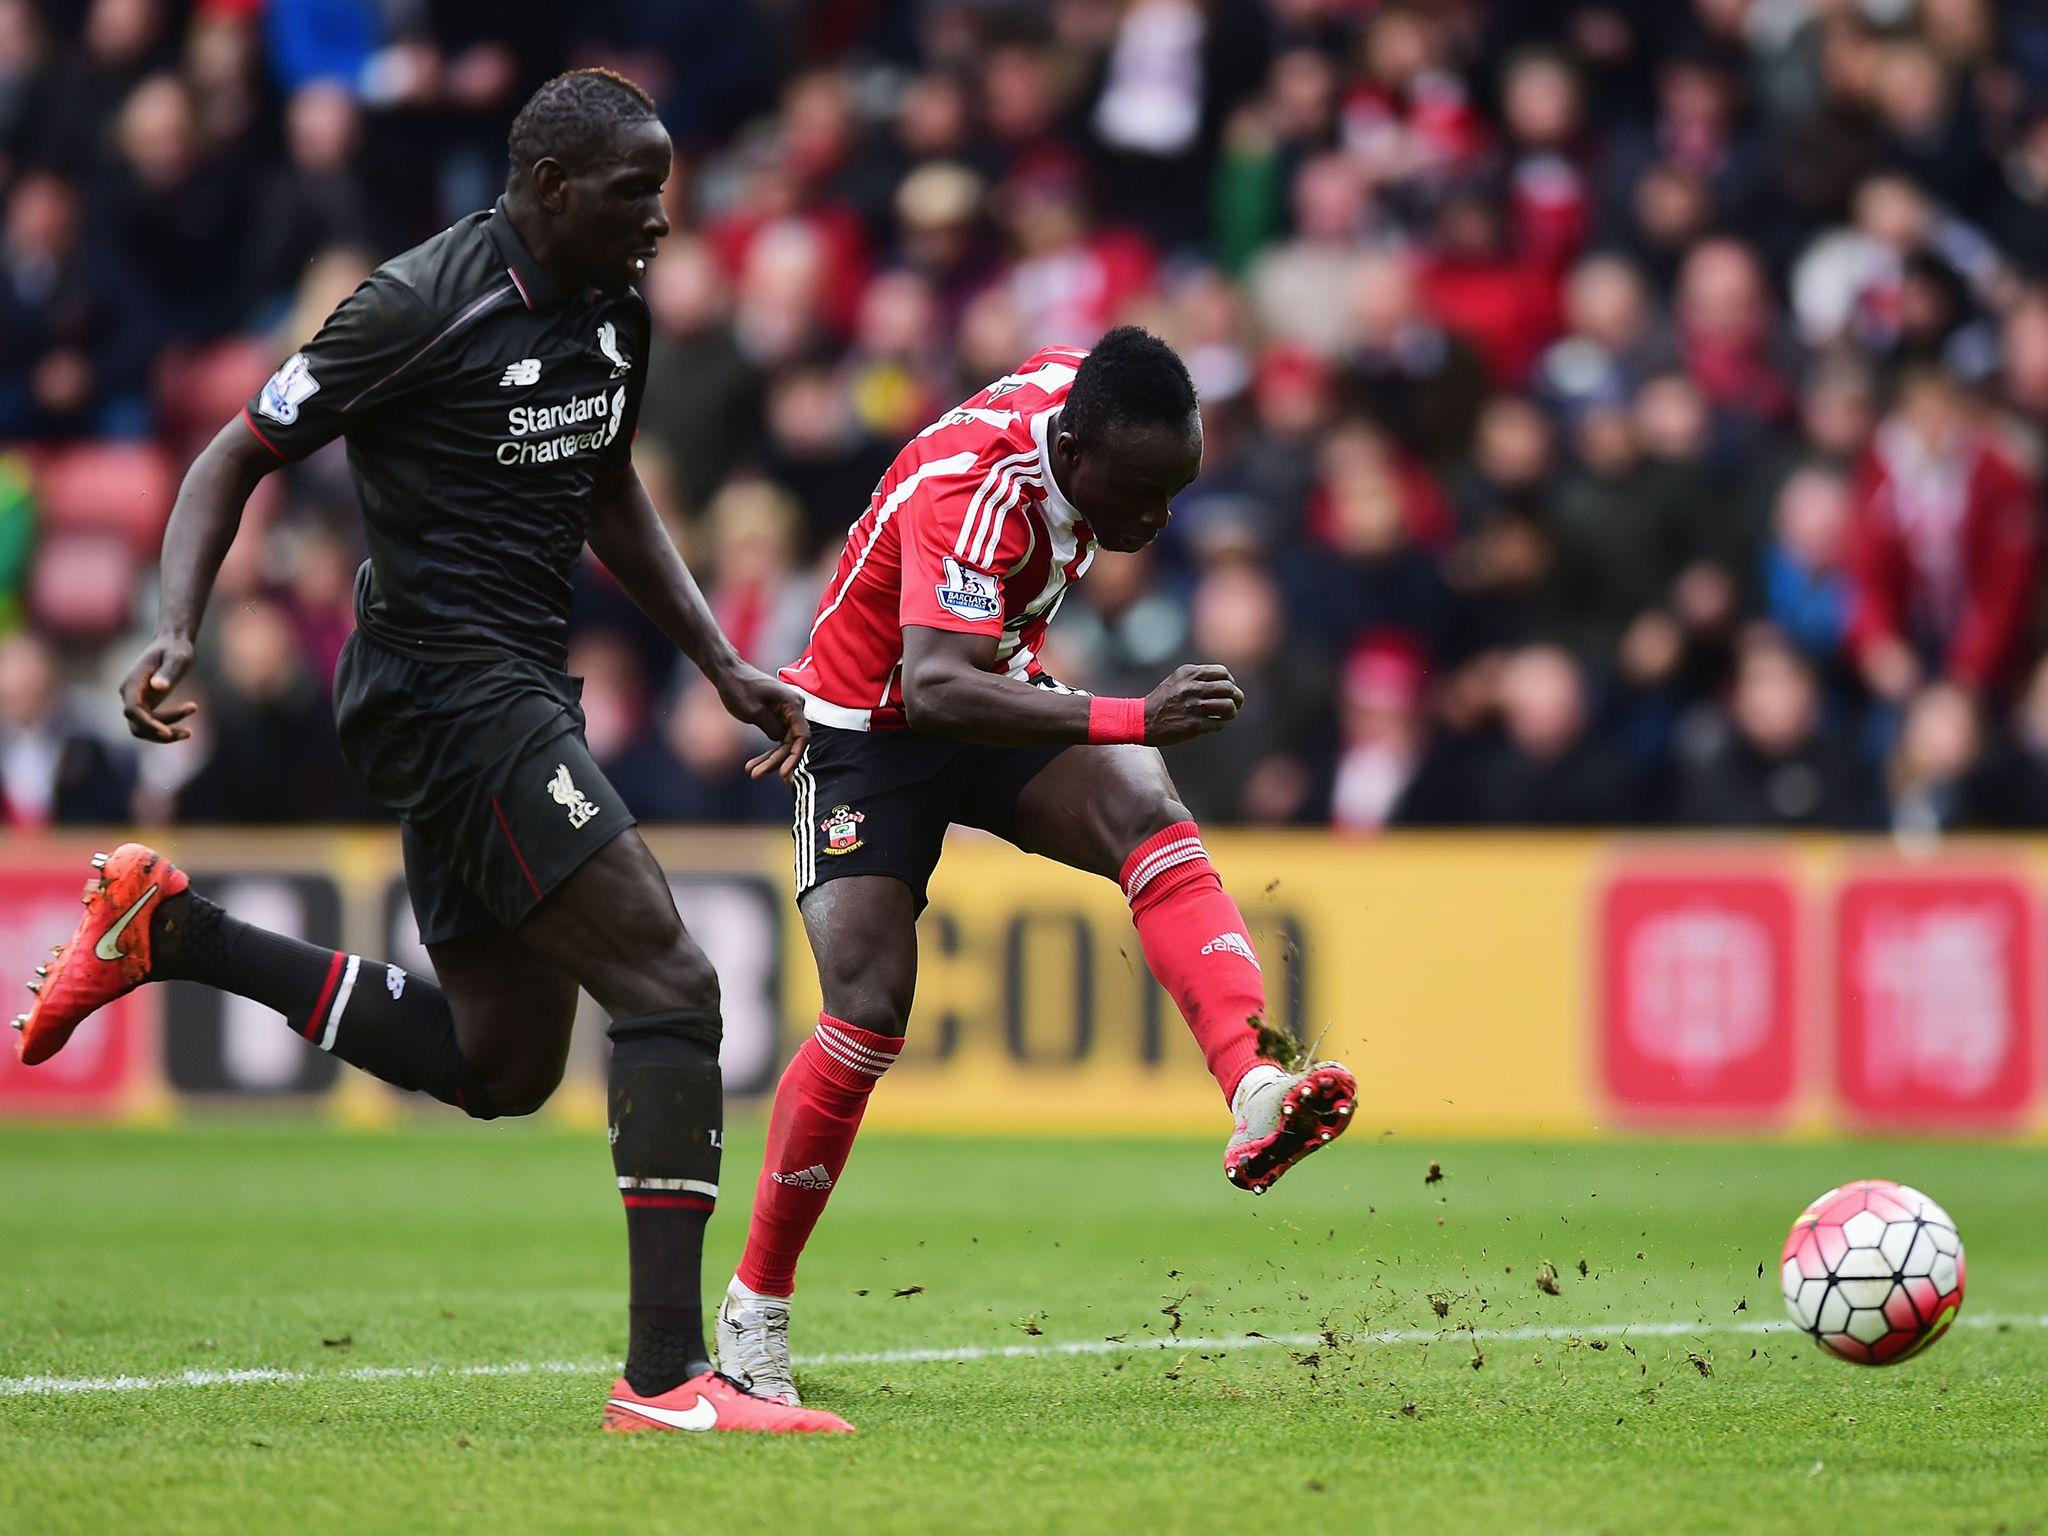 Southampton vs Liverpool match report: Sadio Mane inspires Saints